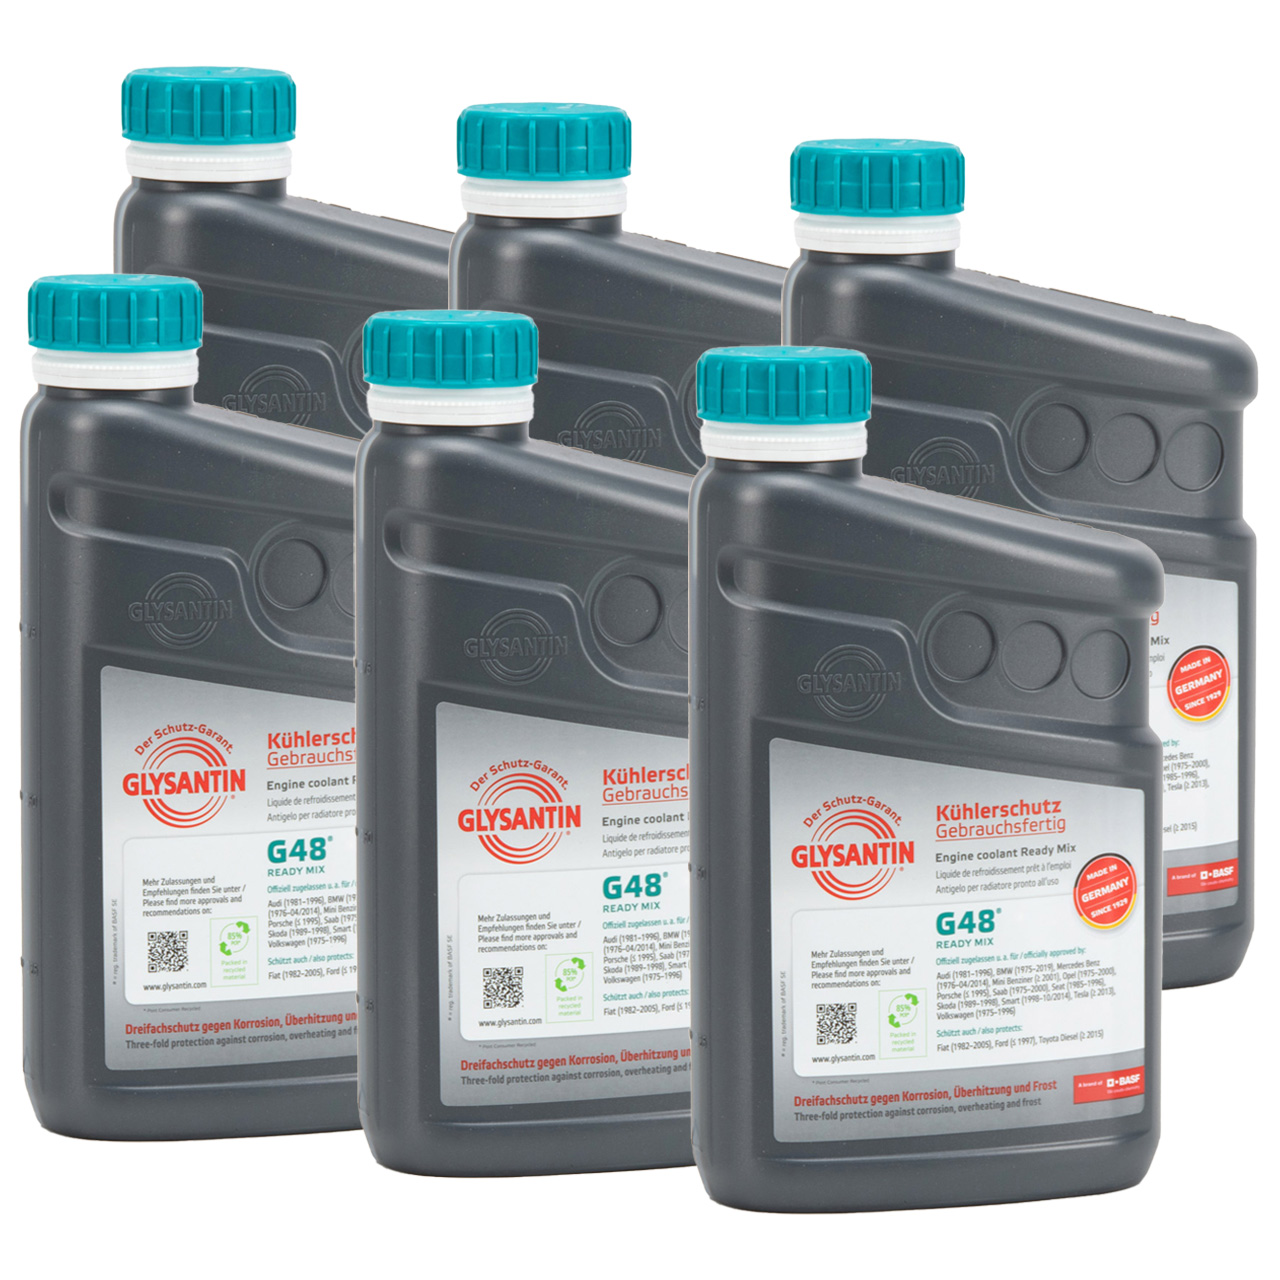 6L 6 Liter BASF GLYSANTIN Frostschutz Kühlerfrostschutz Ready Mix